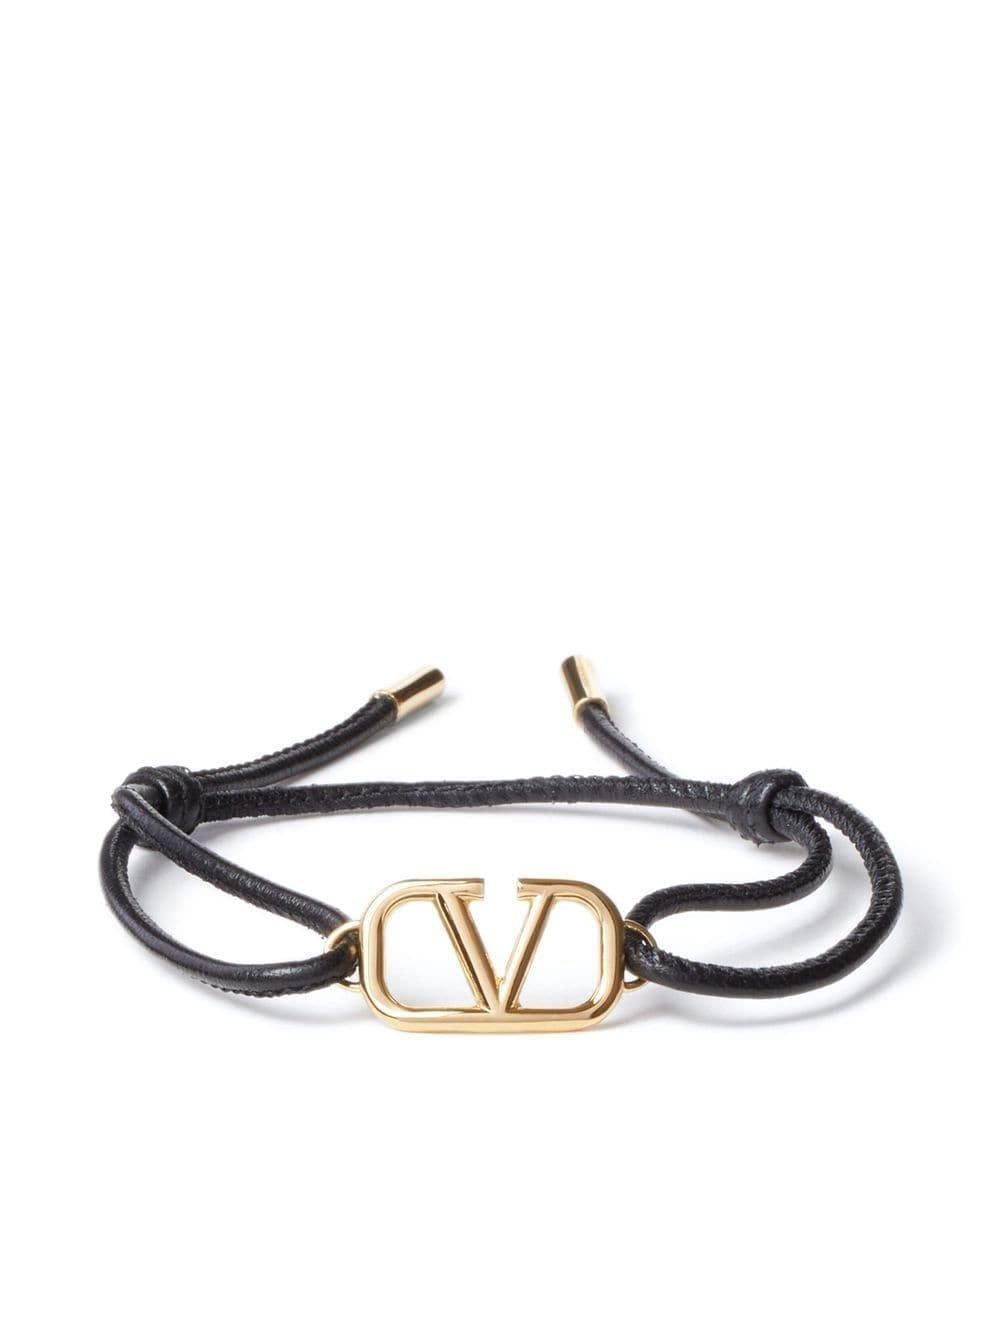 Vlogo Signature Leather Bracelet for Man in Black | Valentino PH